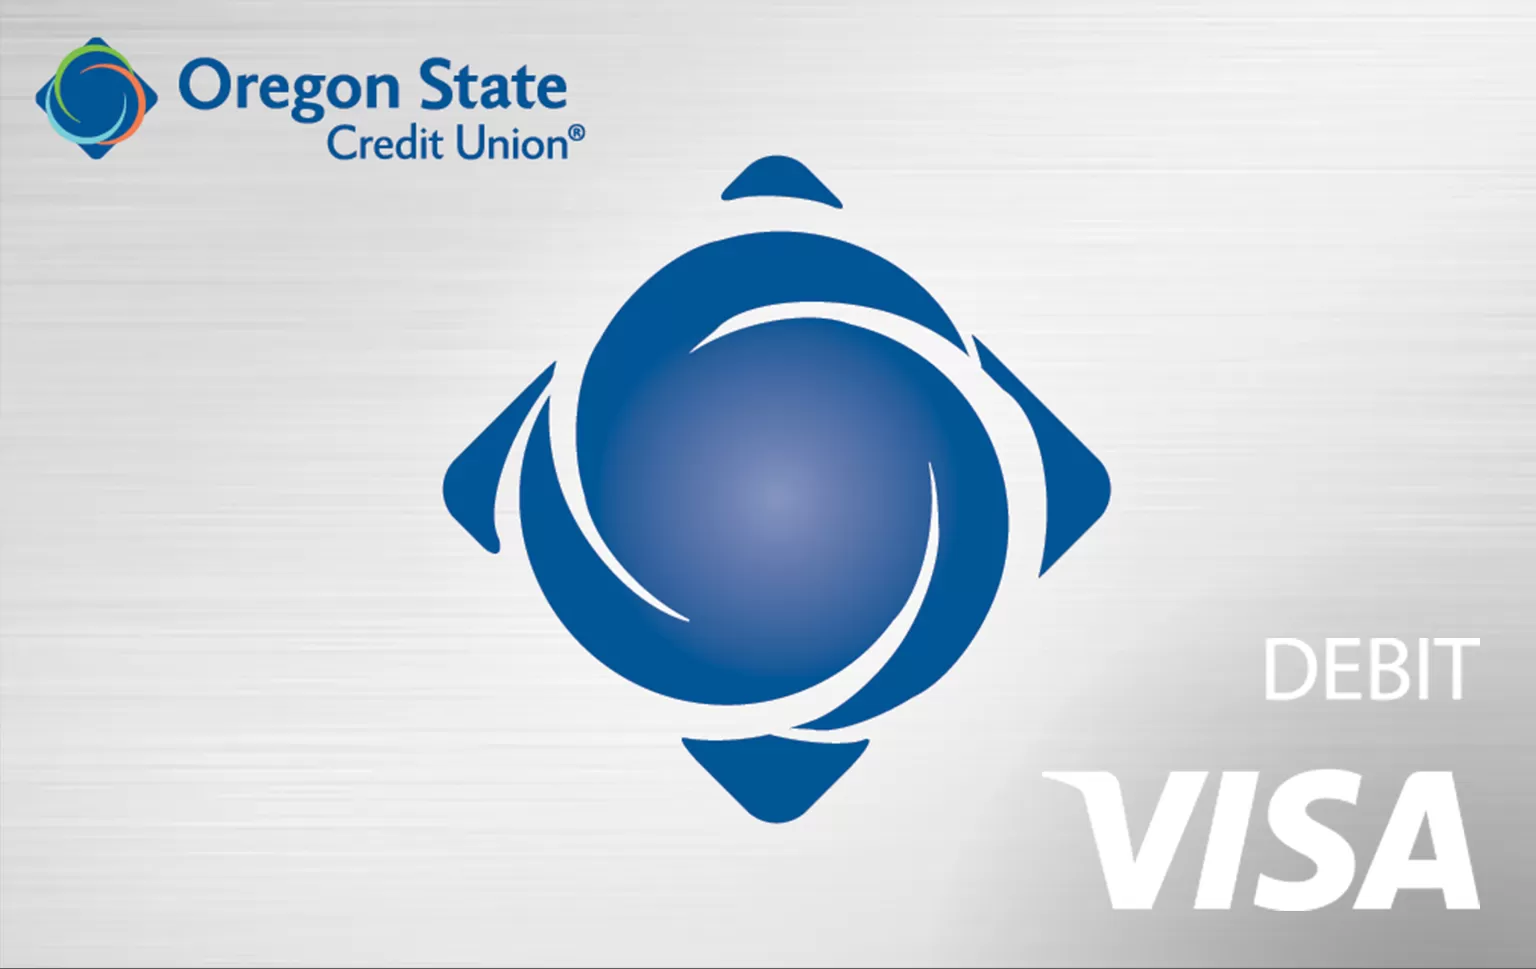 Visa debit card - Digital wallet - Oregon State Credit Union